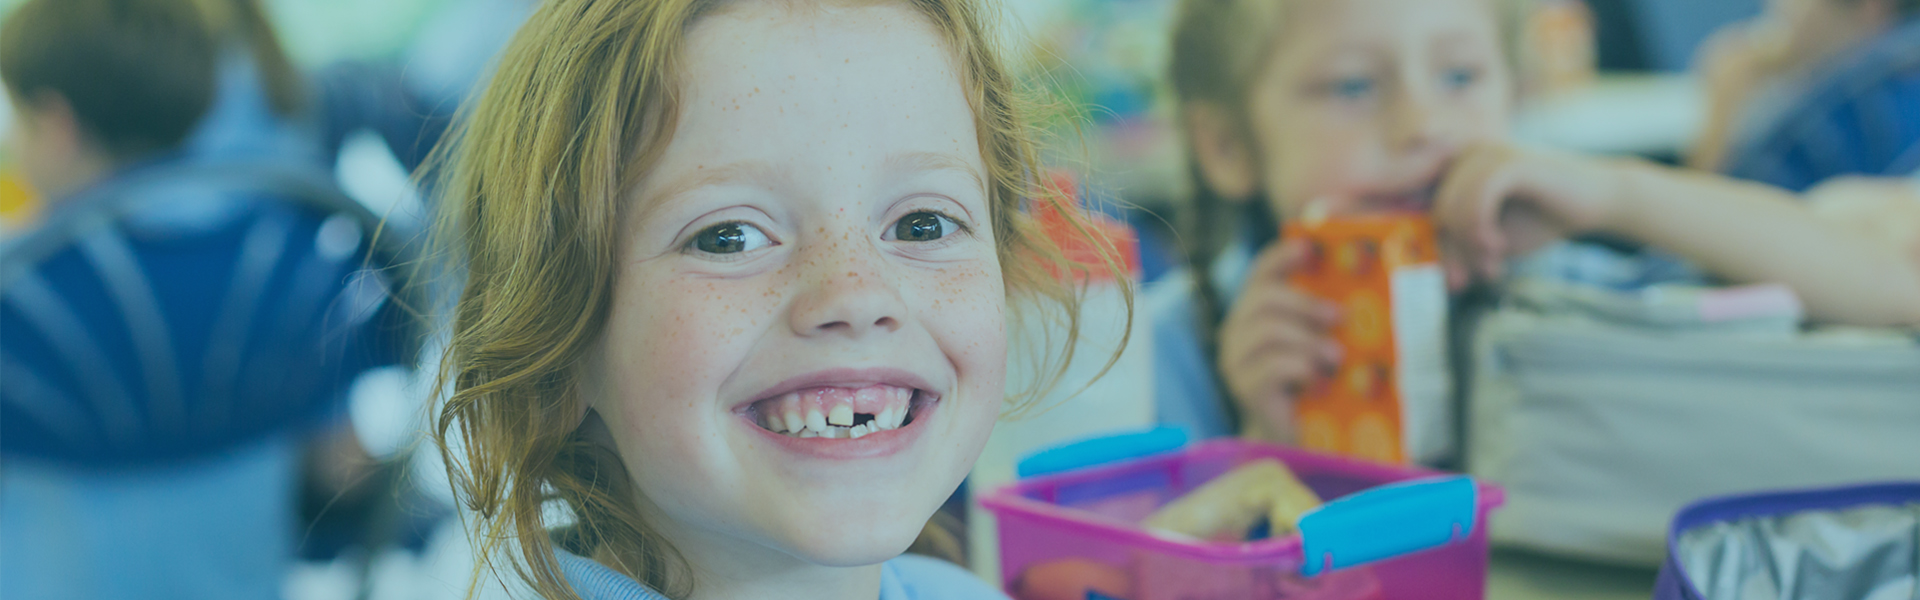 Youth Savings | Child smiling at camera missing teeth